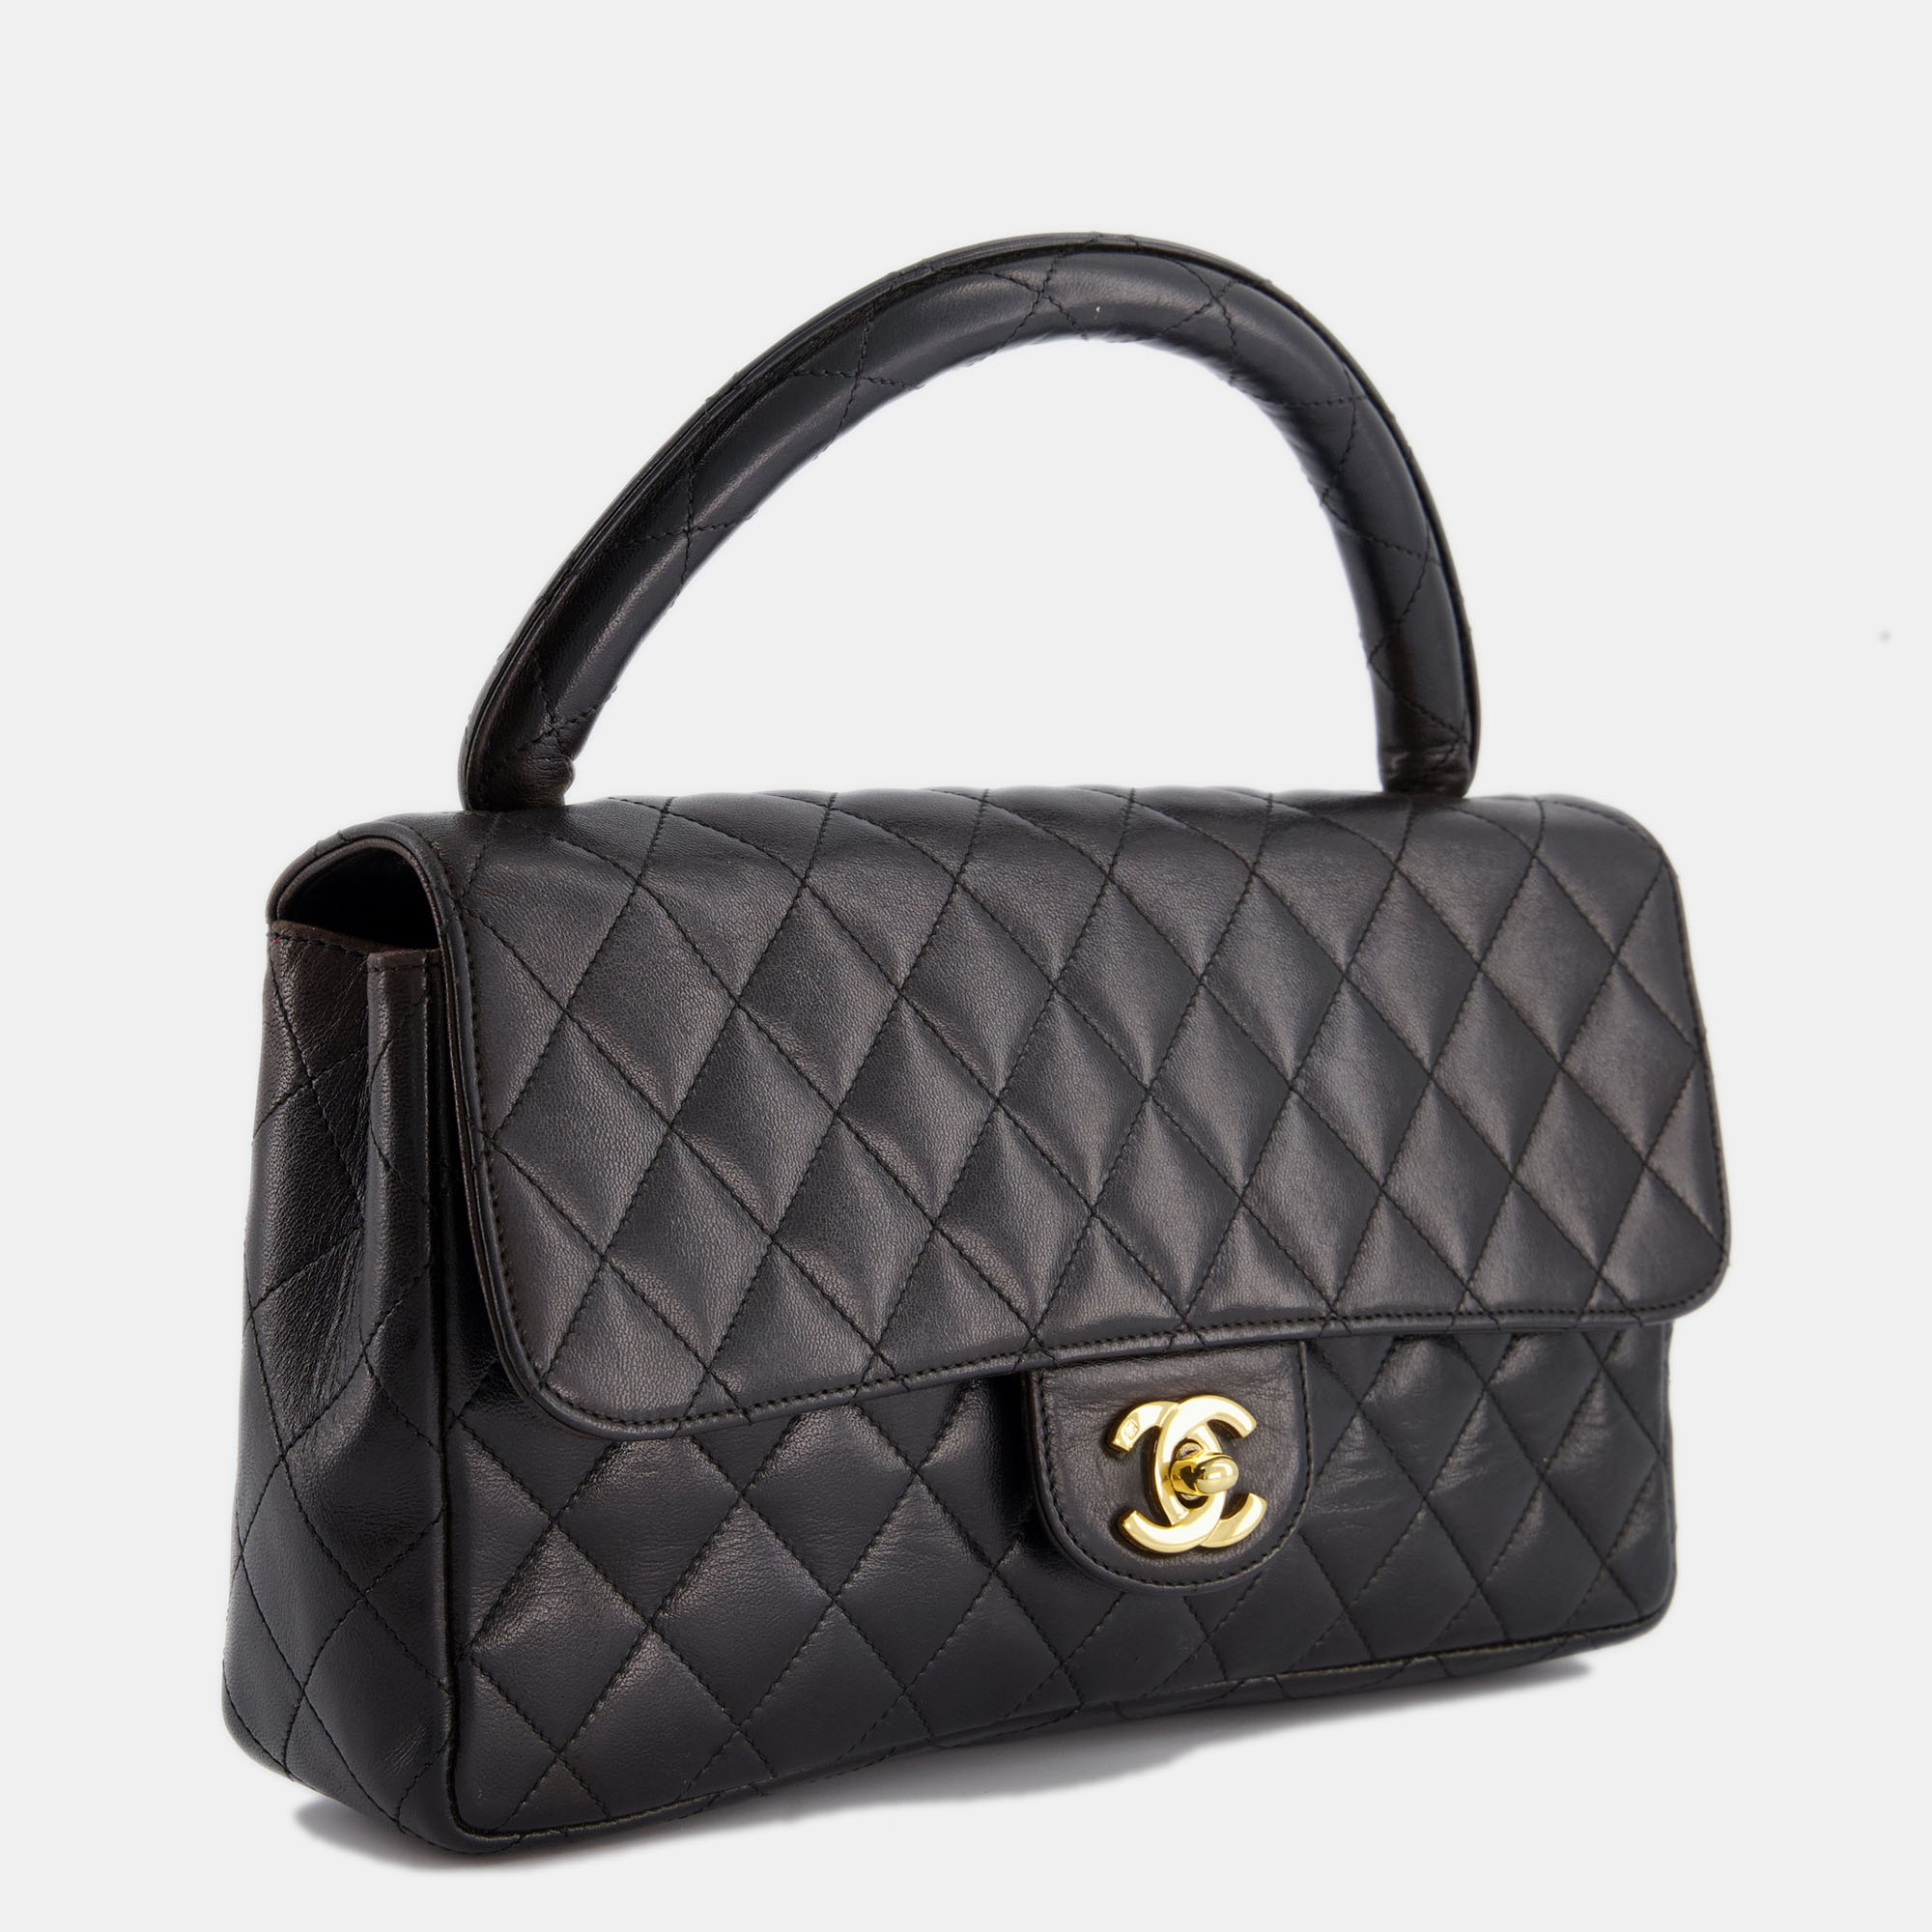 Chanel Black Vintage Lambskin Top Handle Bag with 24K Gold